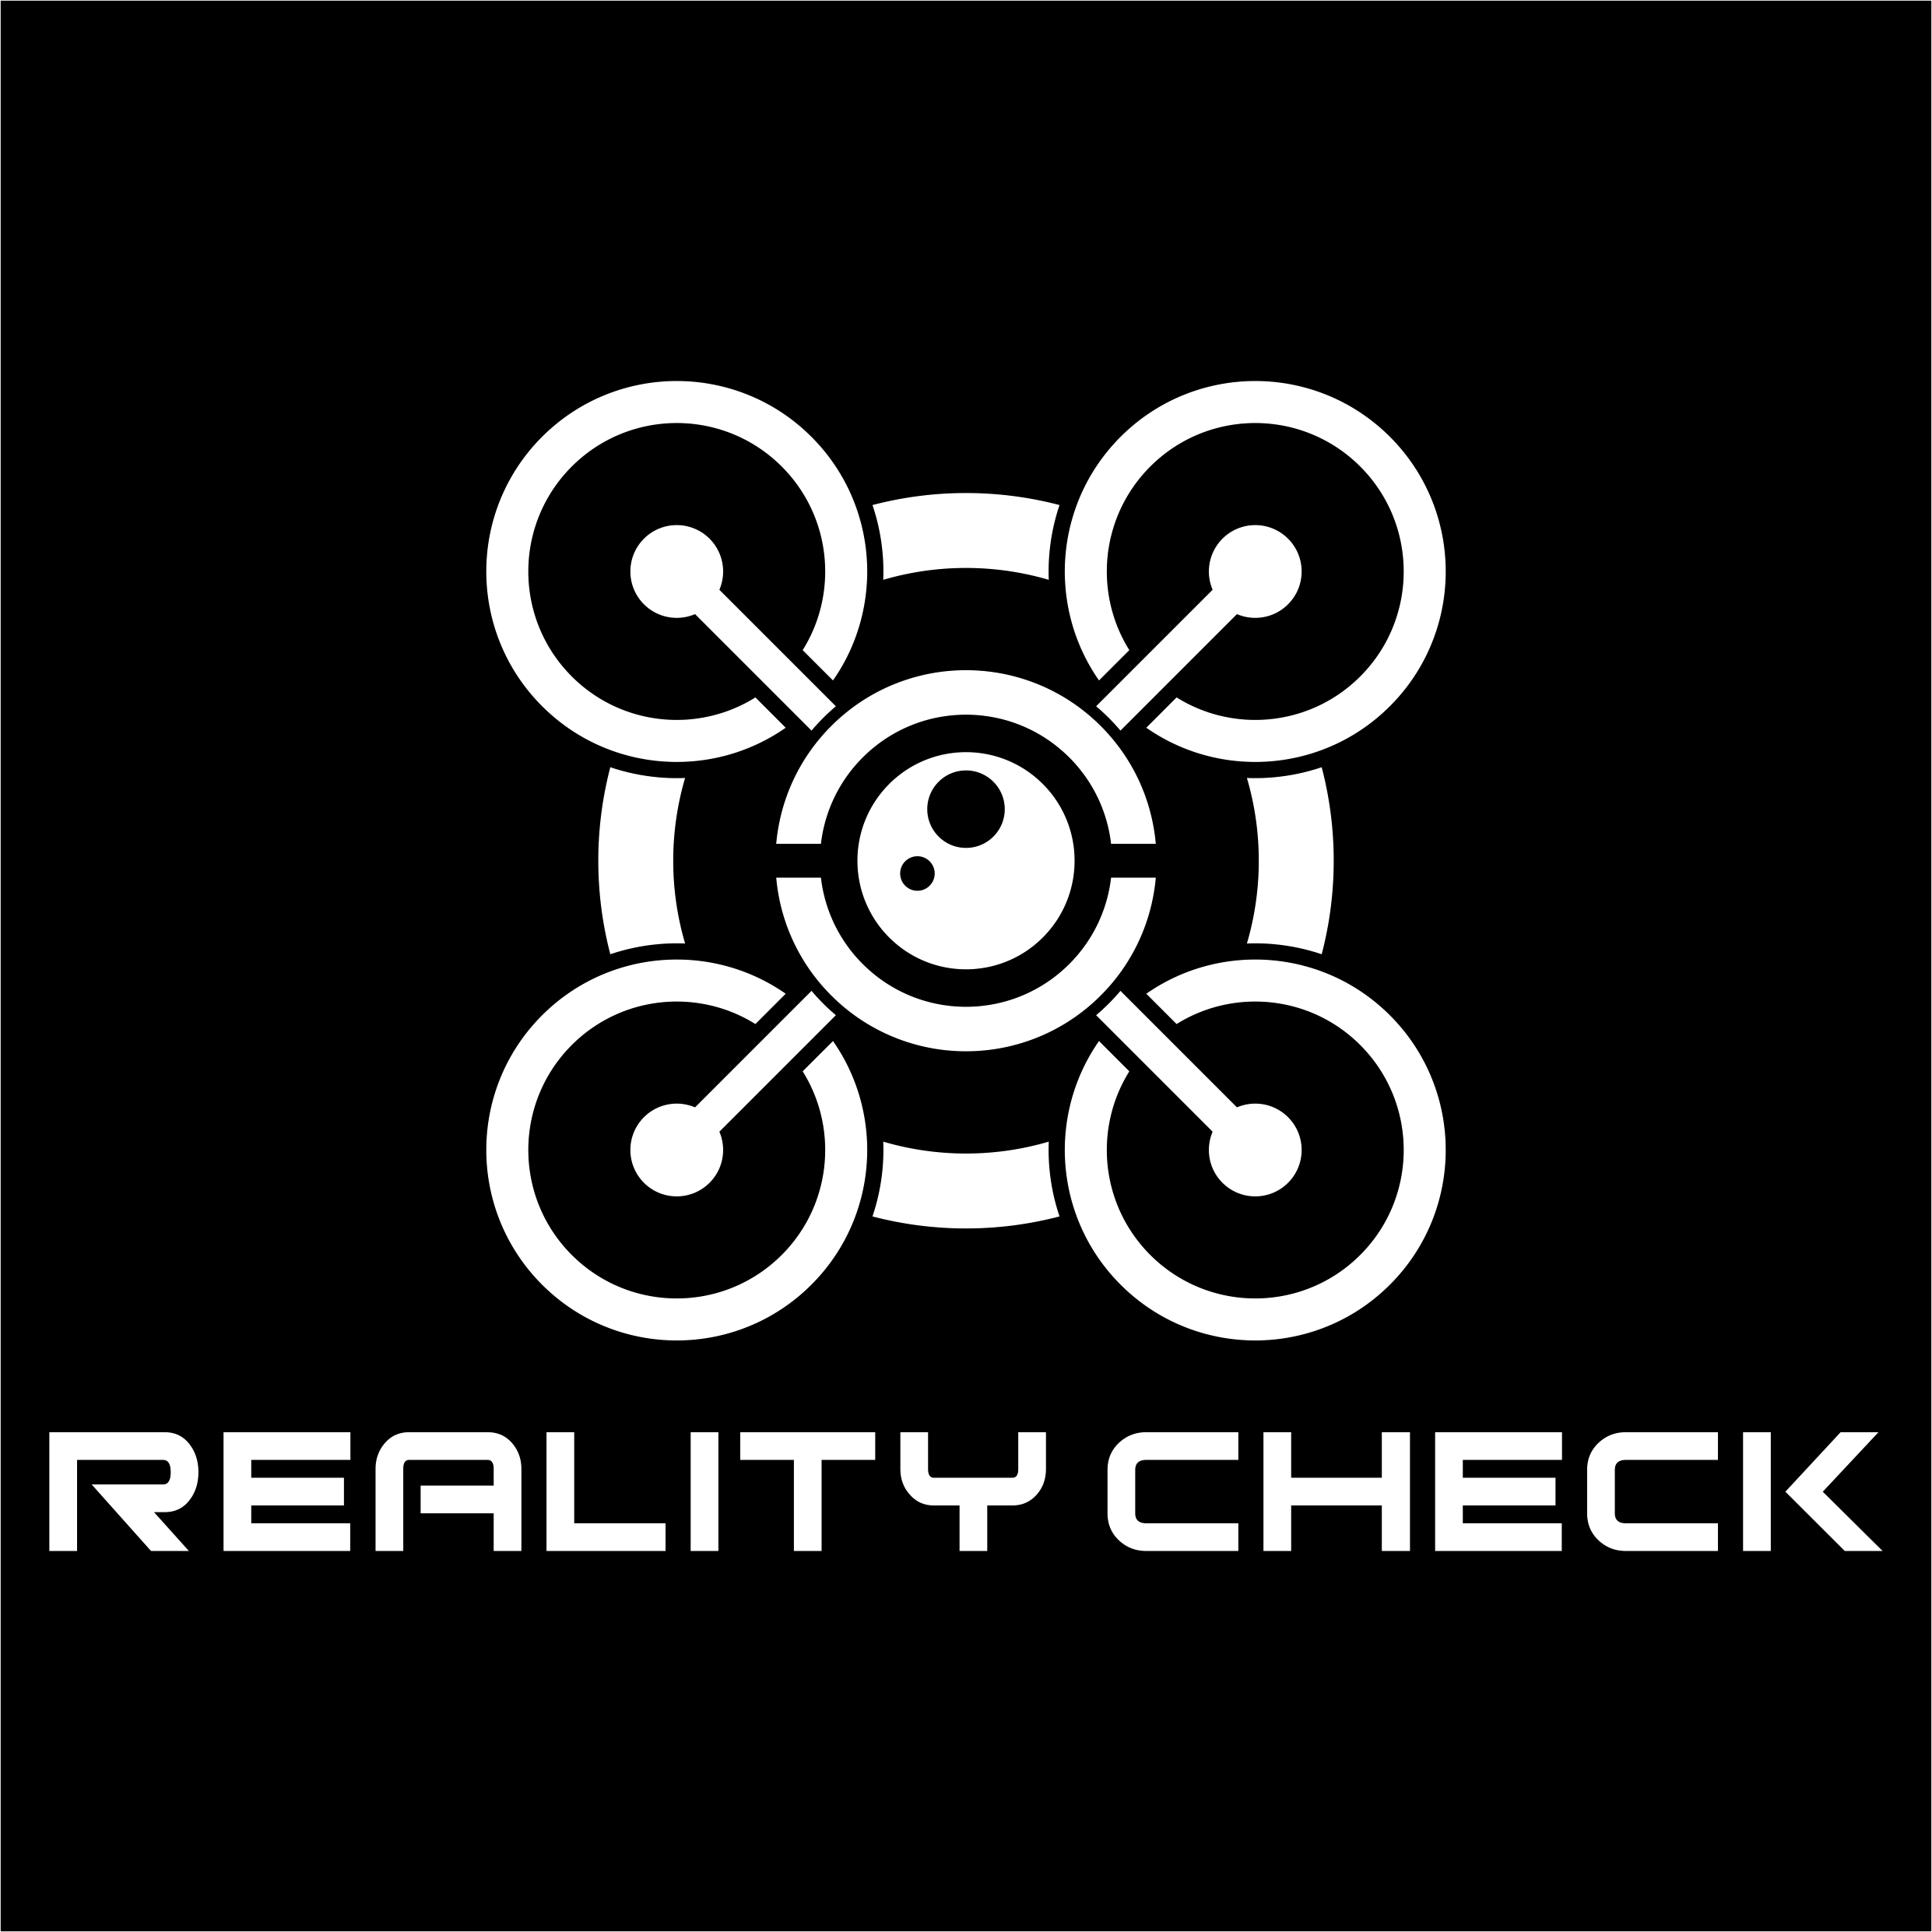 Gold Check Logo - Reality Check